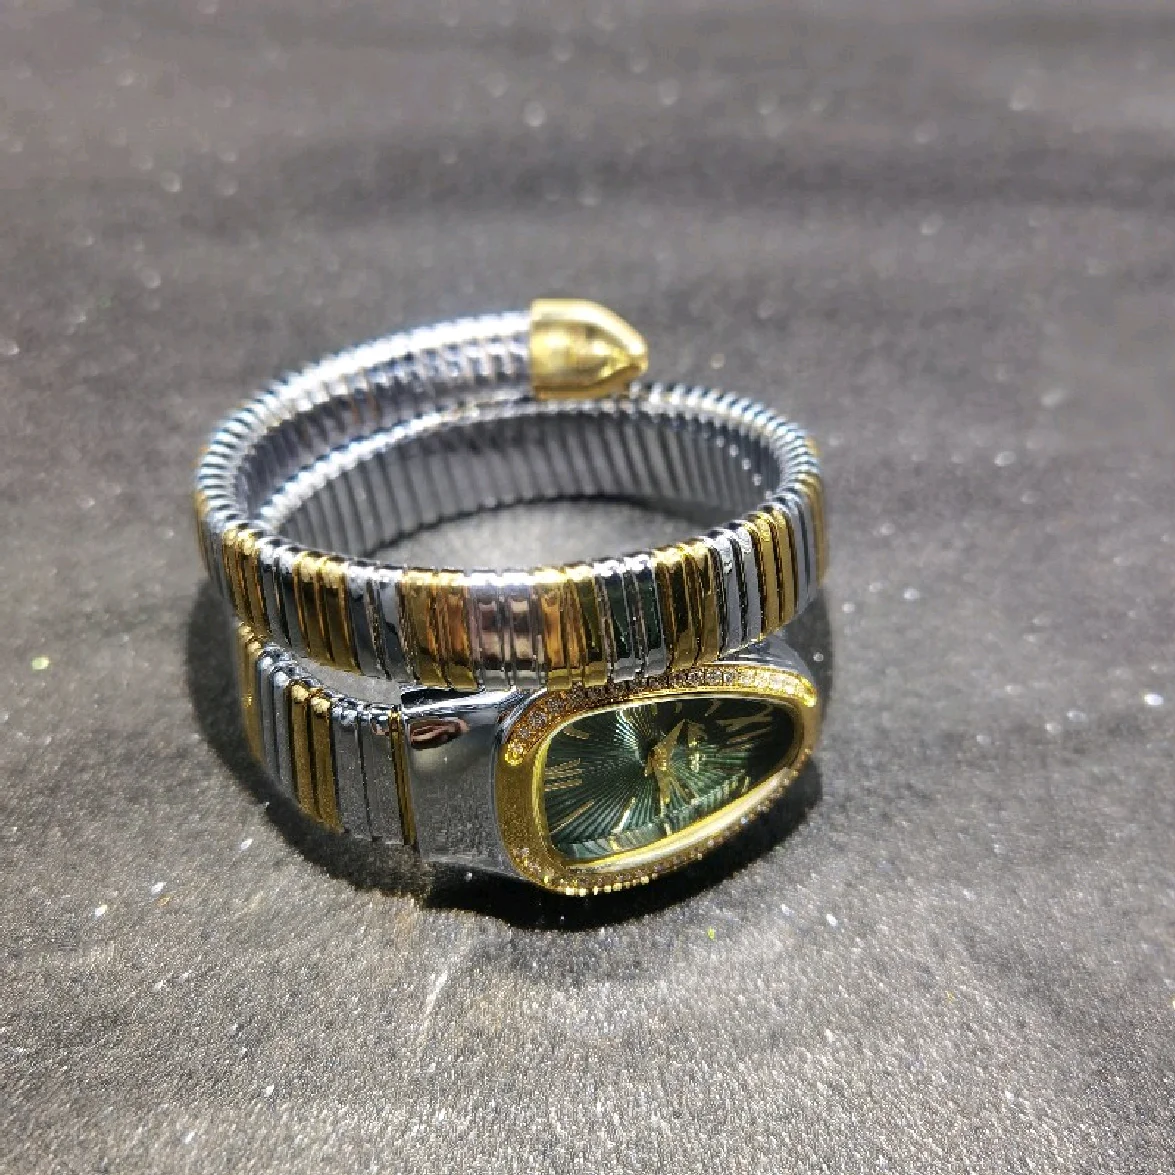 MISSFOX Snake Head Woman Wristwatch Gold And Silver Bracelet Watches Lady Green Dial Diamond Fashion Party Women Quartz Watches enlarge